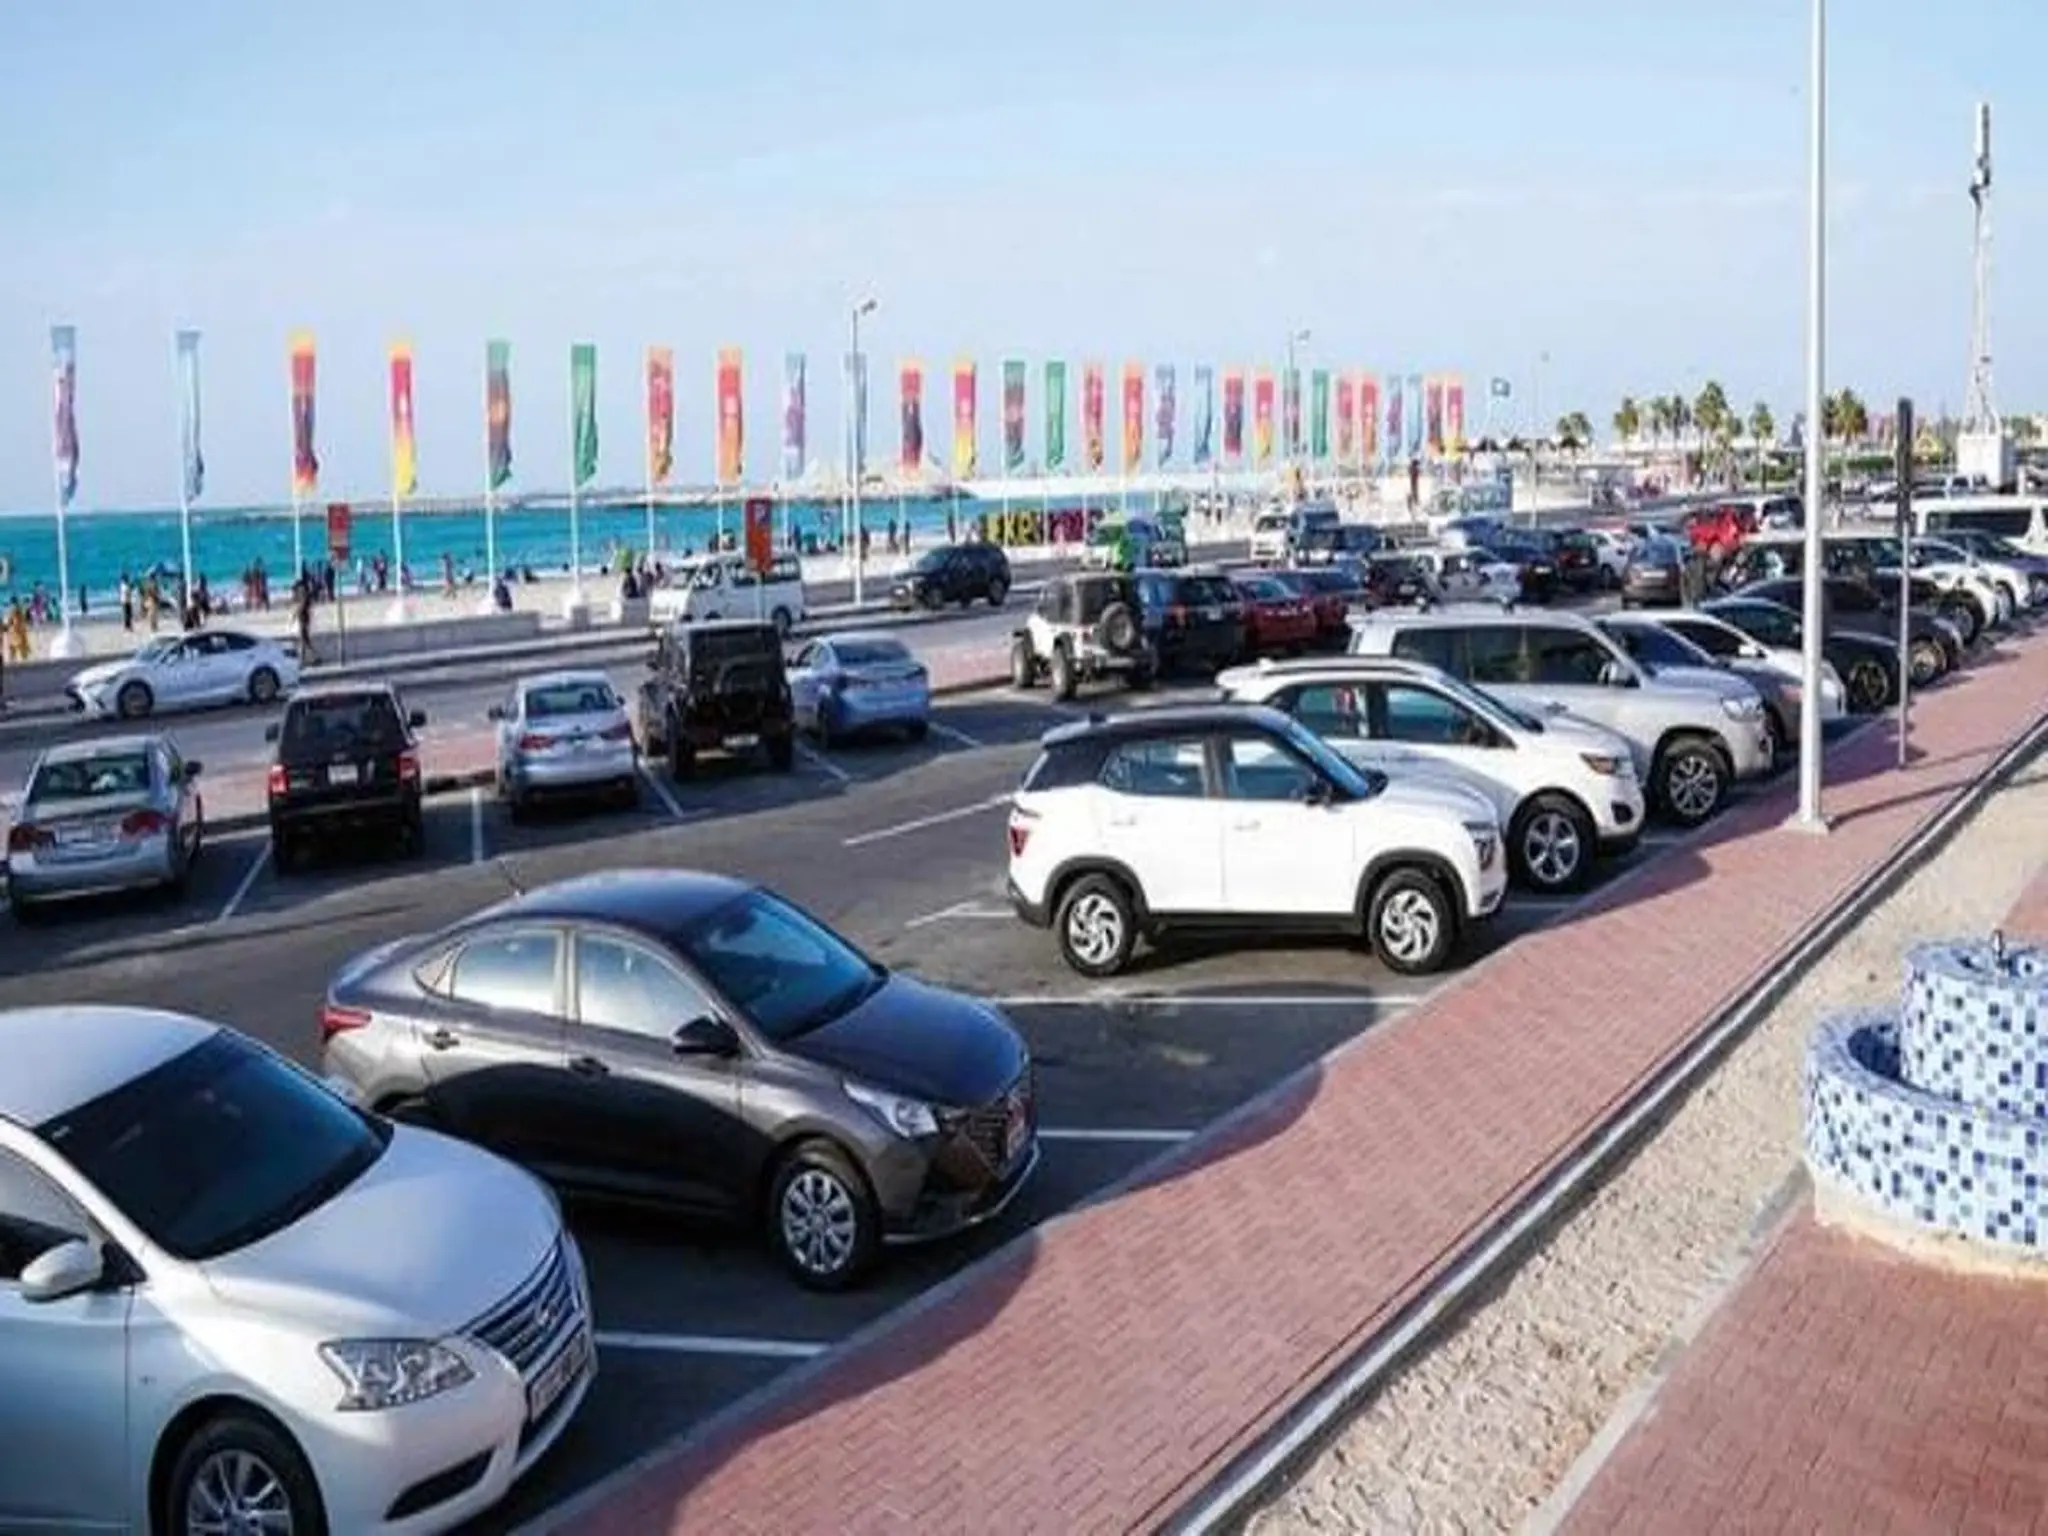 The UAE announces a new parking management company